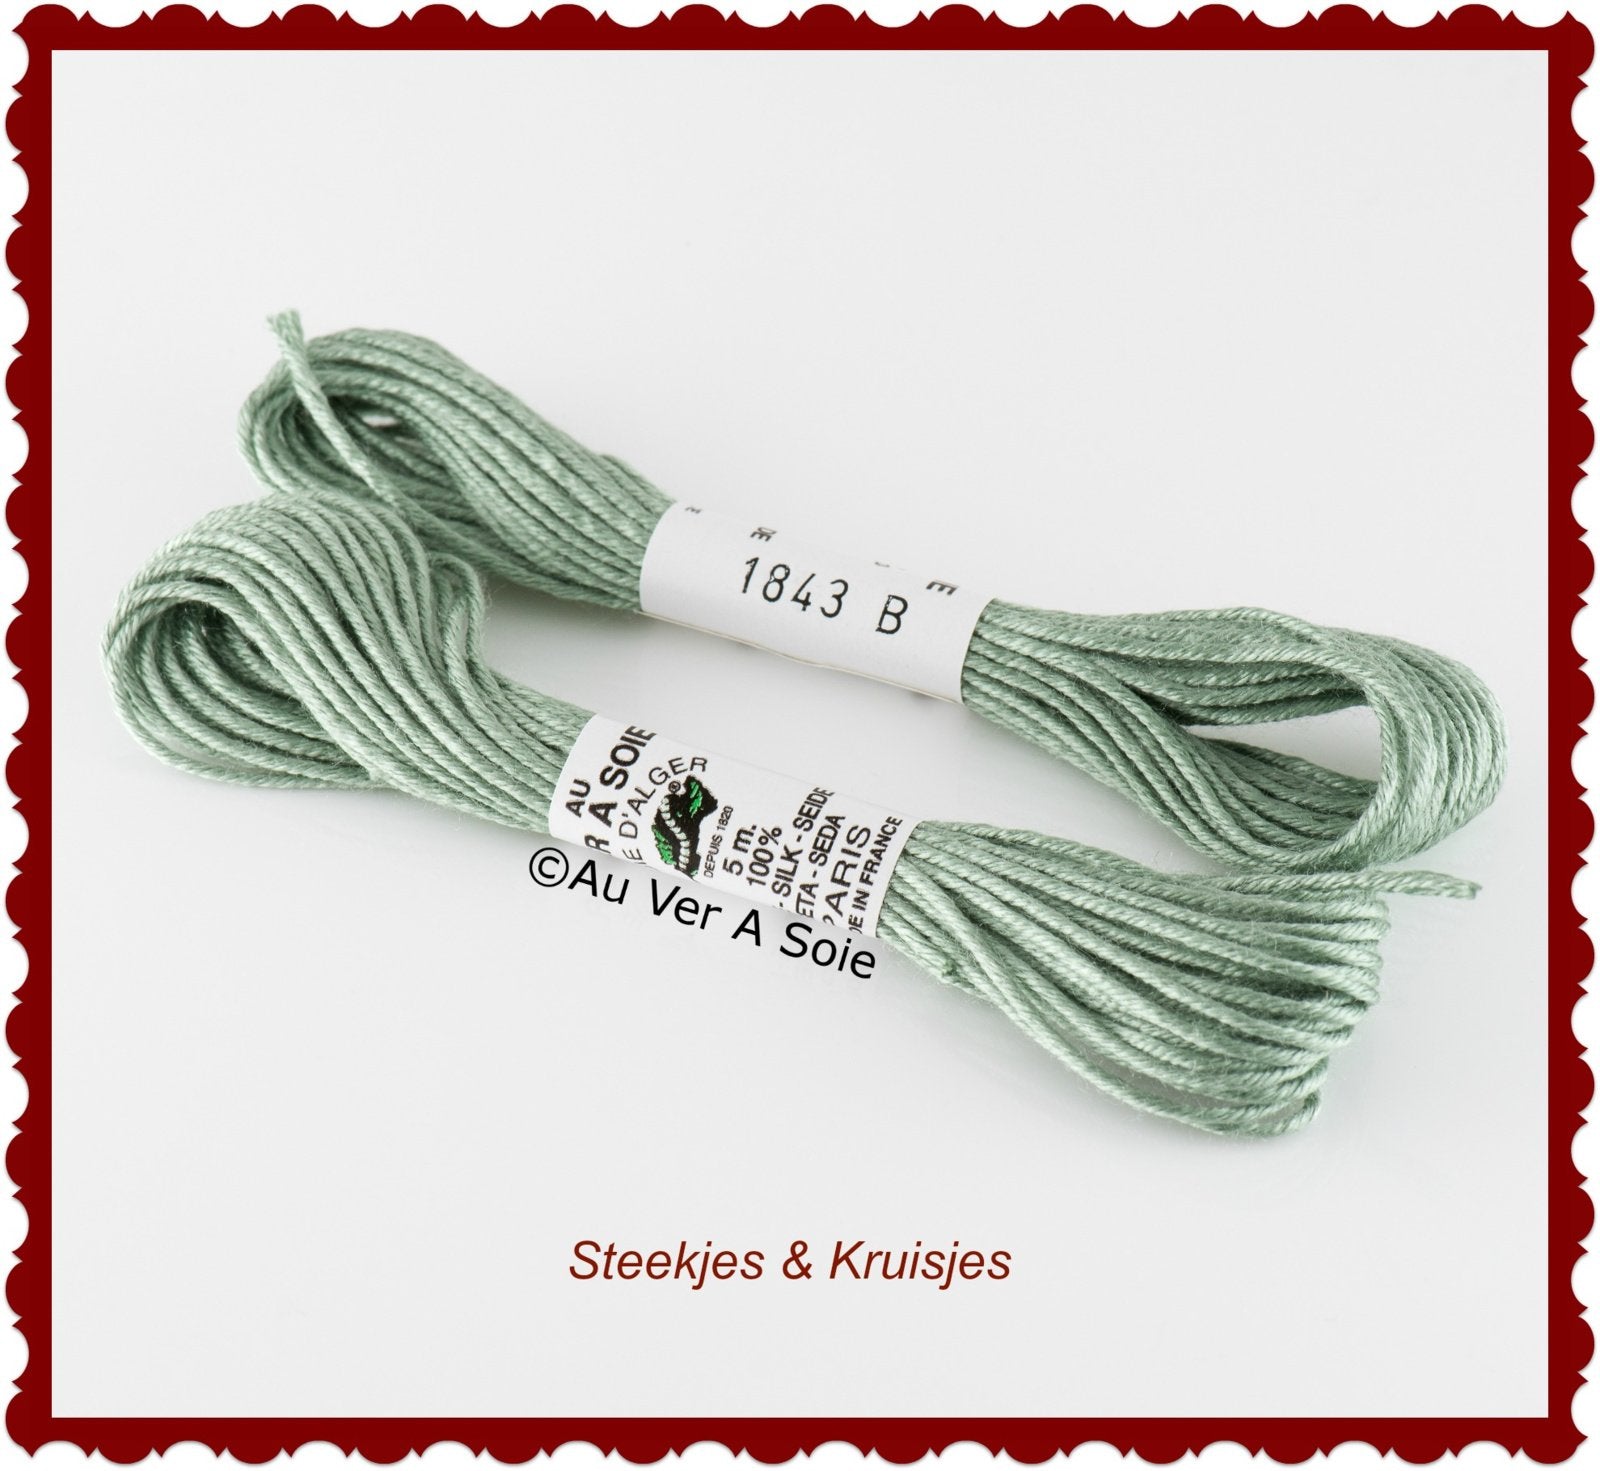 Au ver ie "soie d'alger" silk yarn color no. 1843